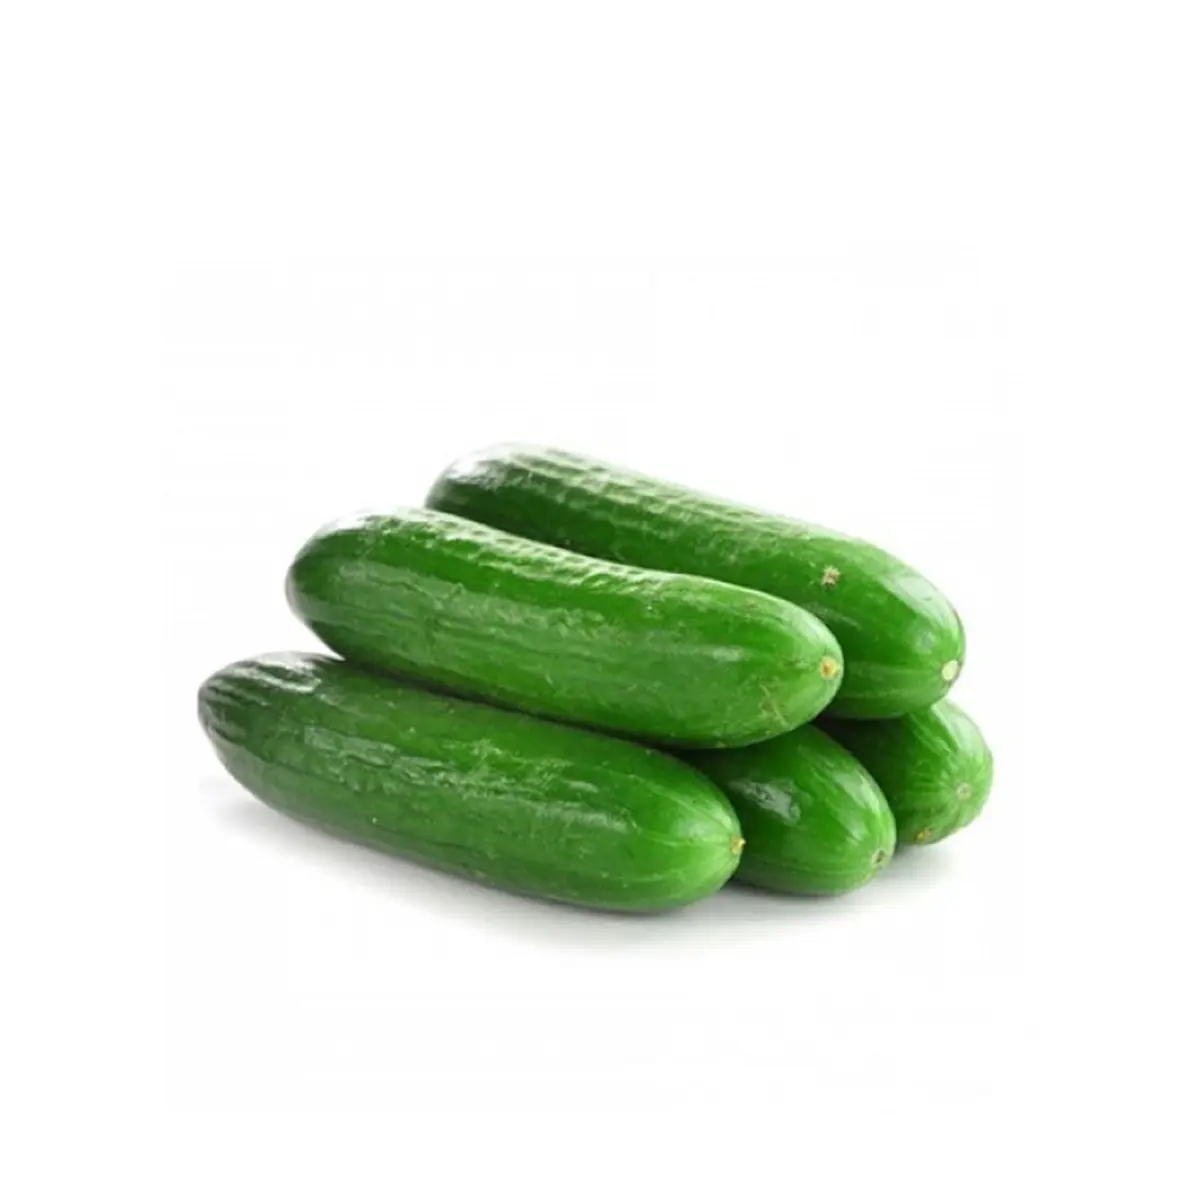 Cucumber Lebanese Each